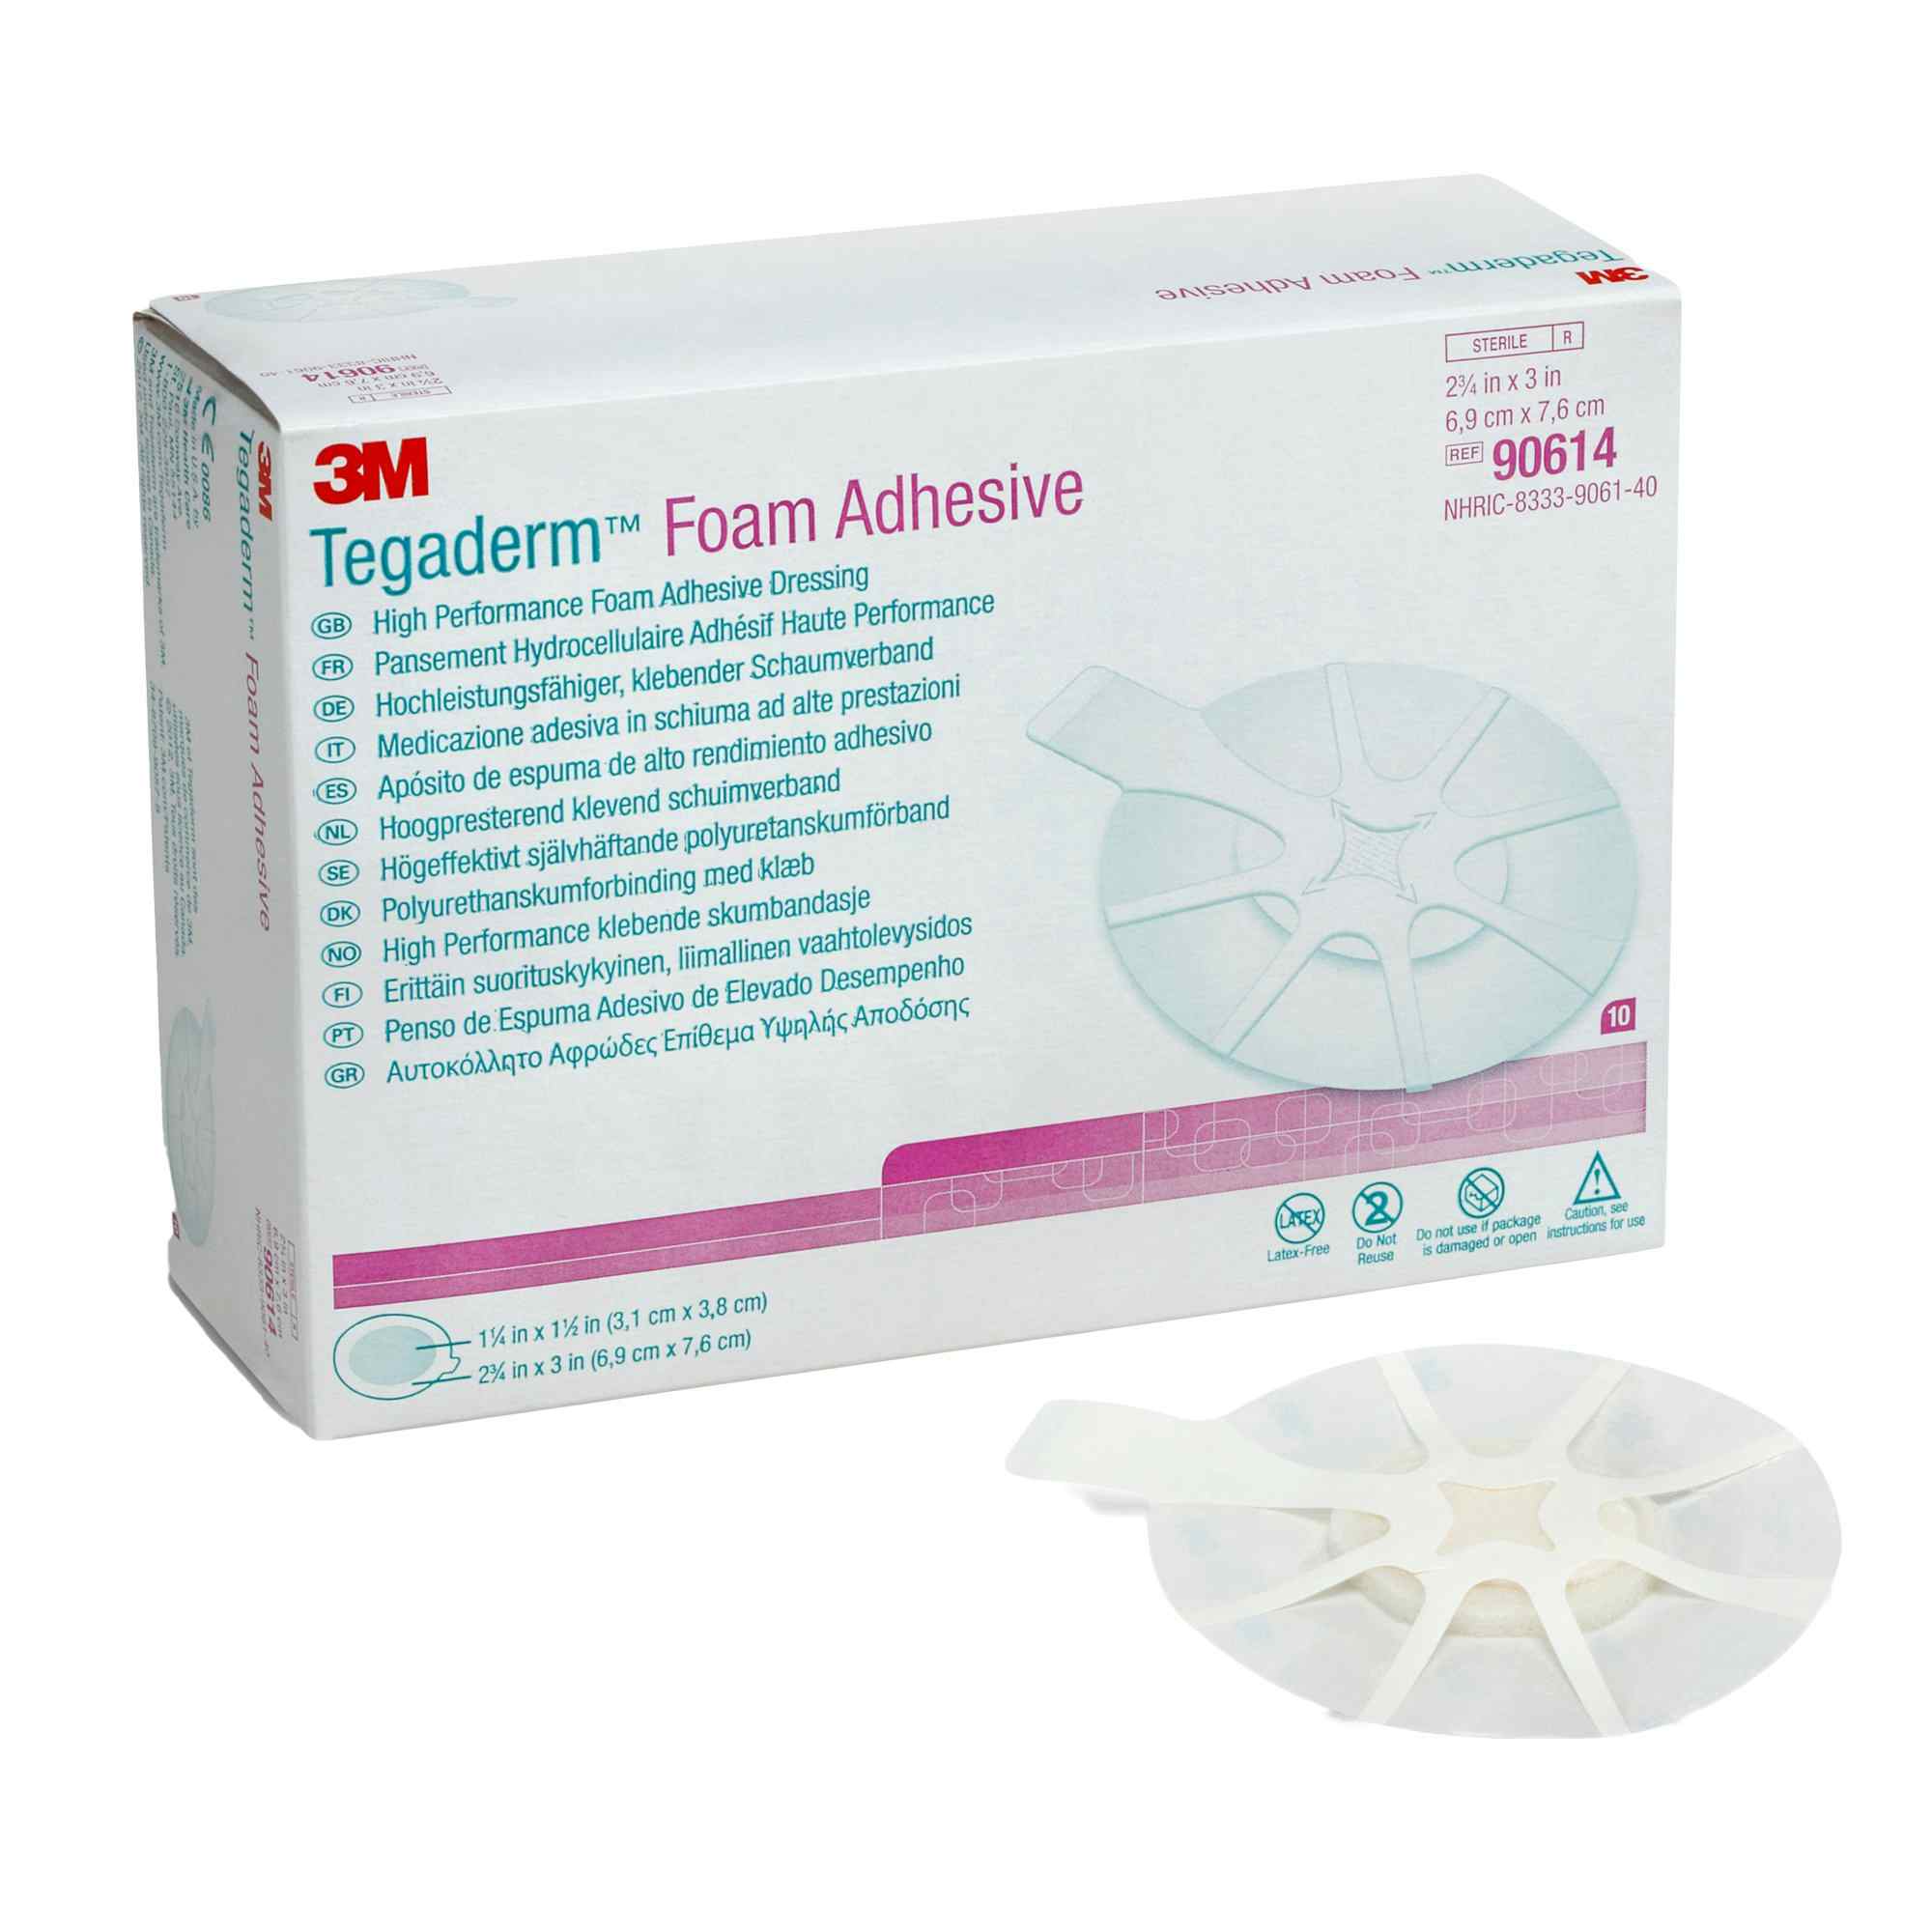 3M Tegaderm Foam Adhesive High Performance Foam Adhesive Dressing, 2.75 X 2.75"